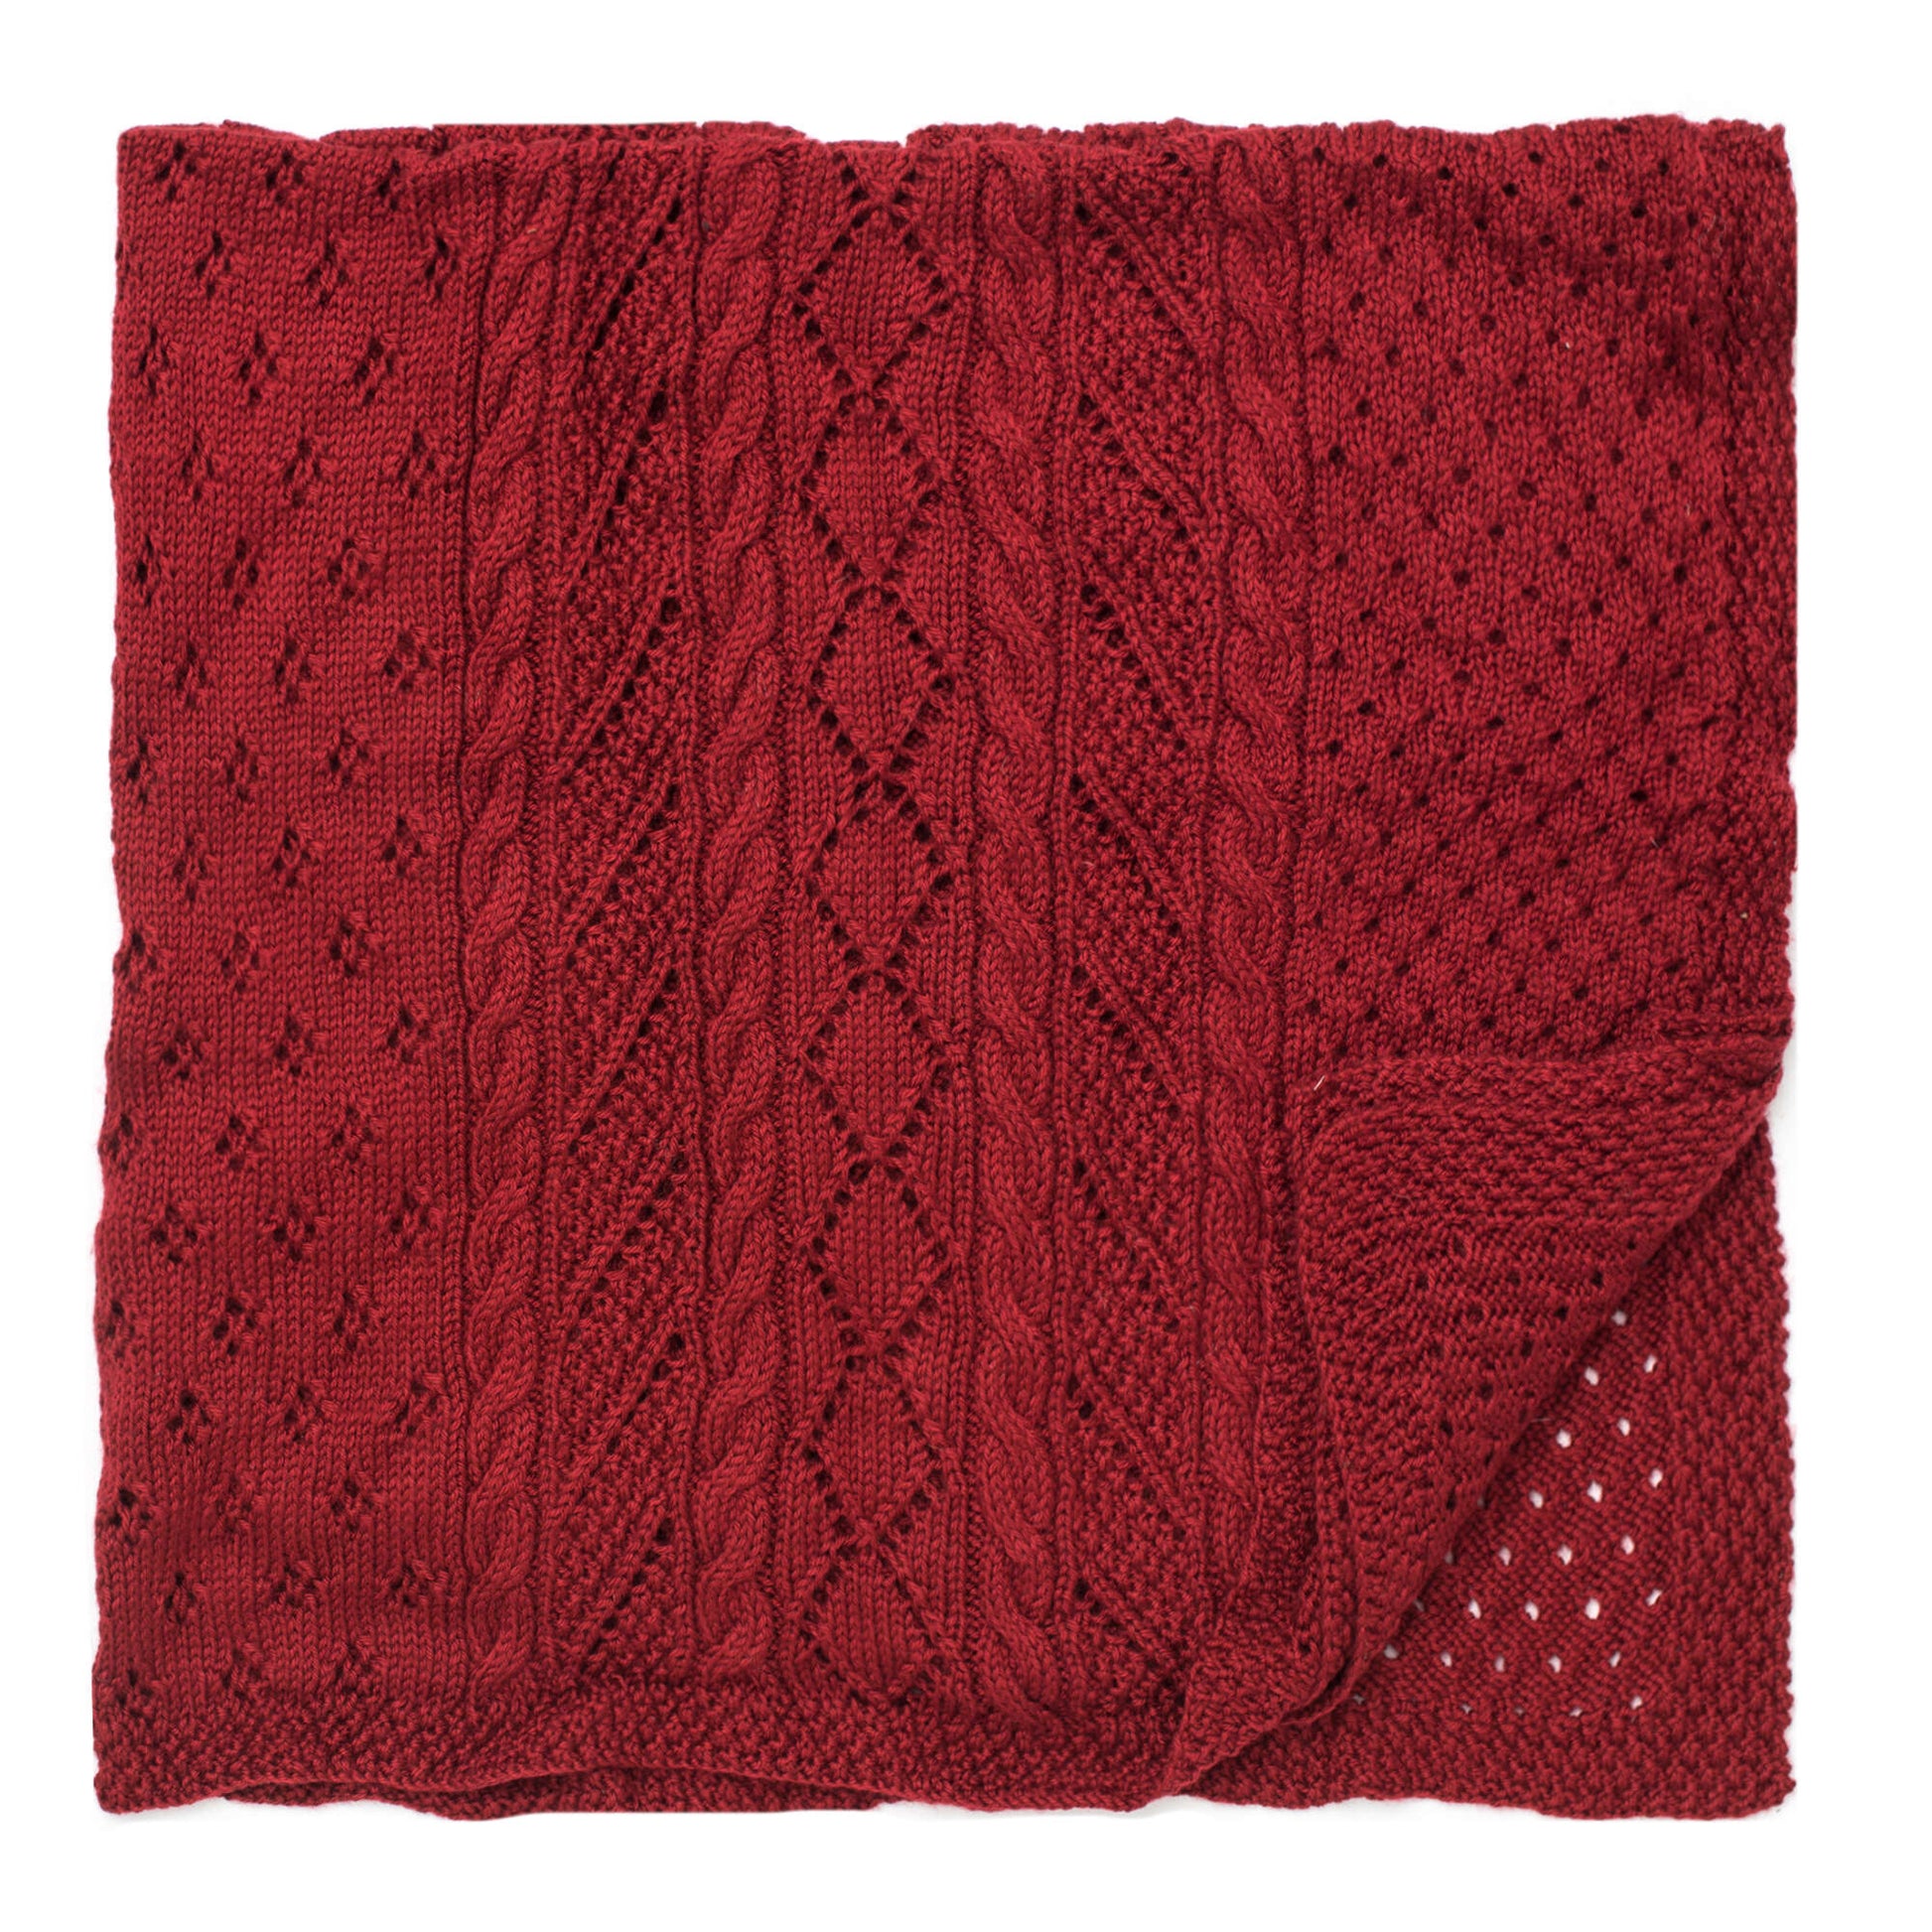 Free Caron Lace Panel Throw Knit Pattern